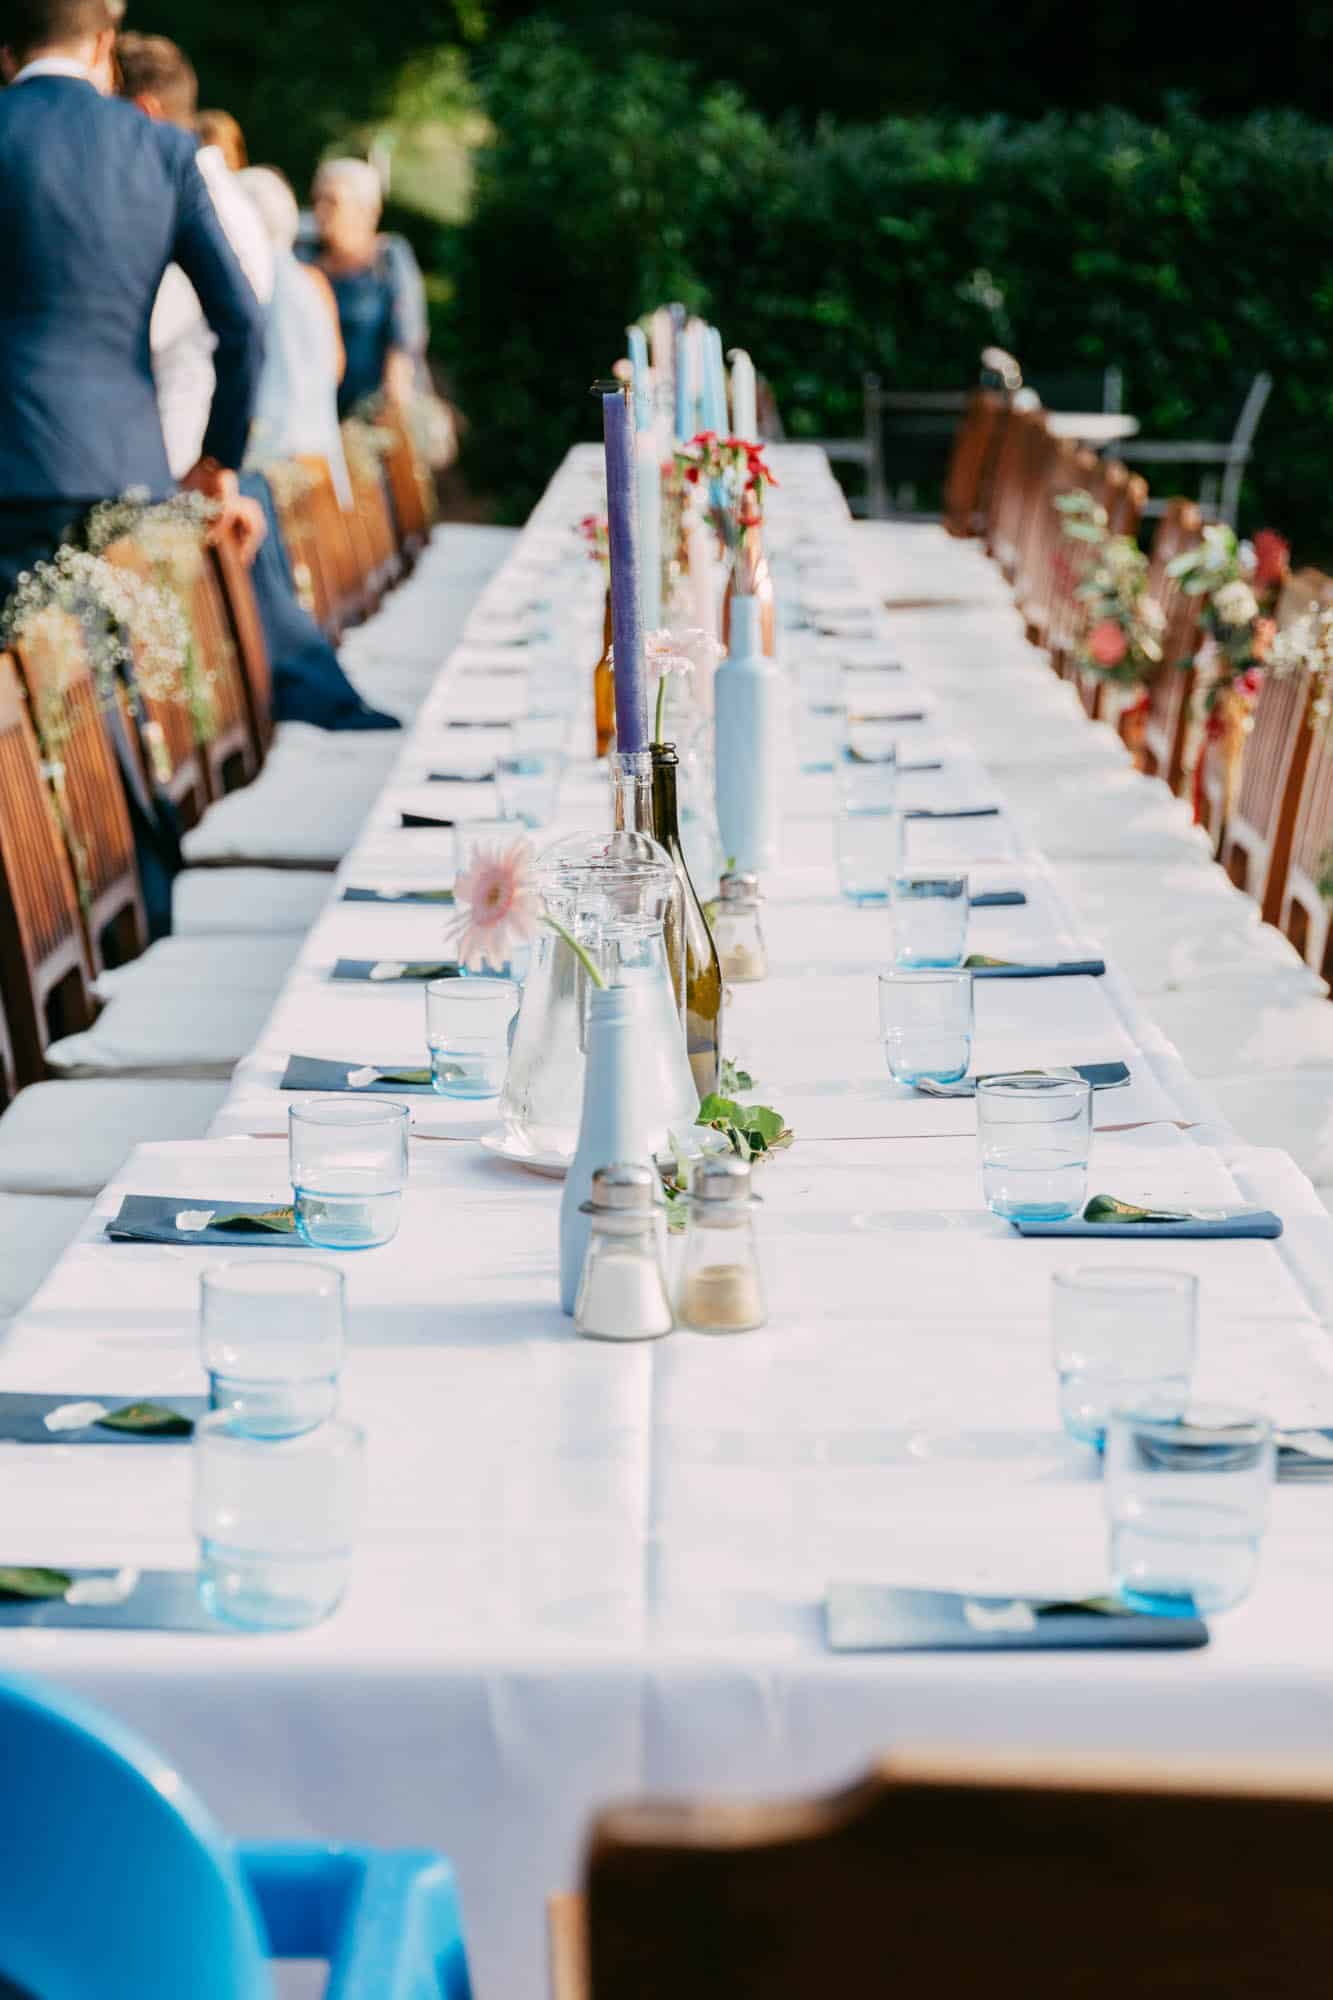     Description: A long table set up for a wedding party.